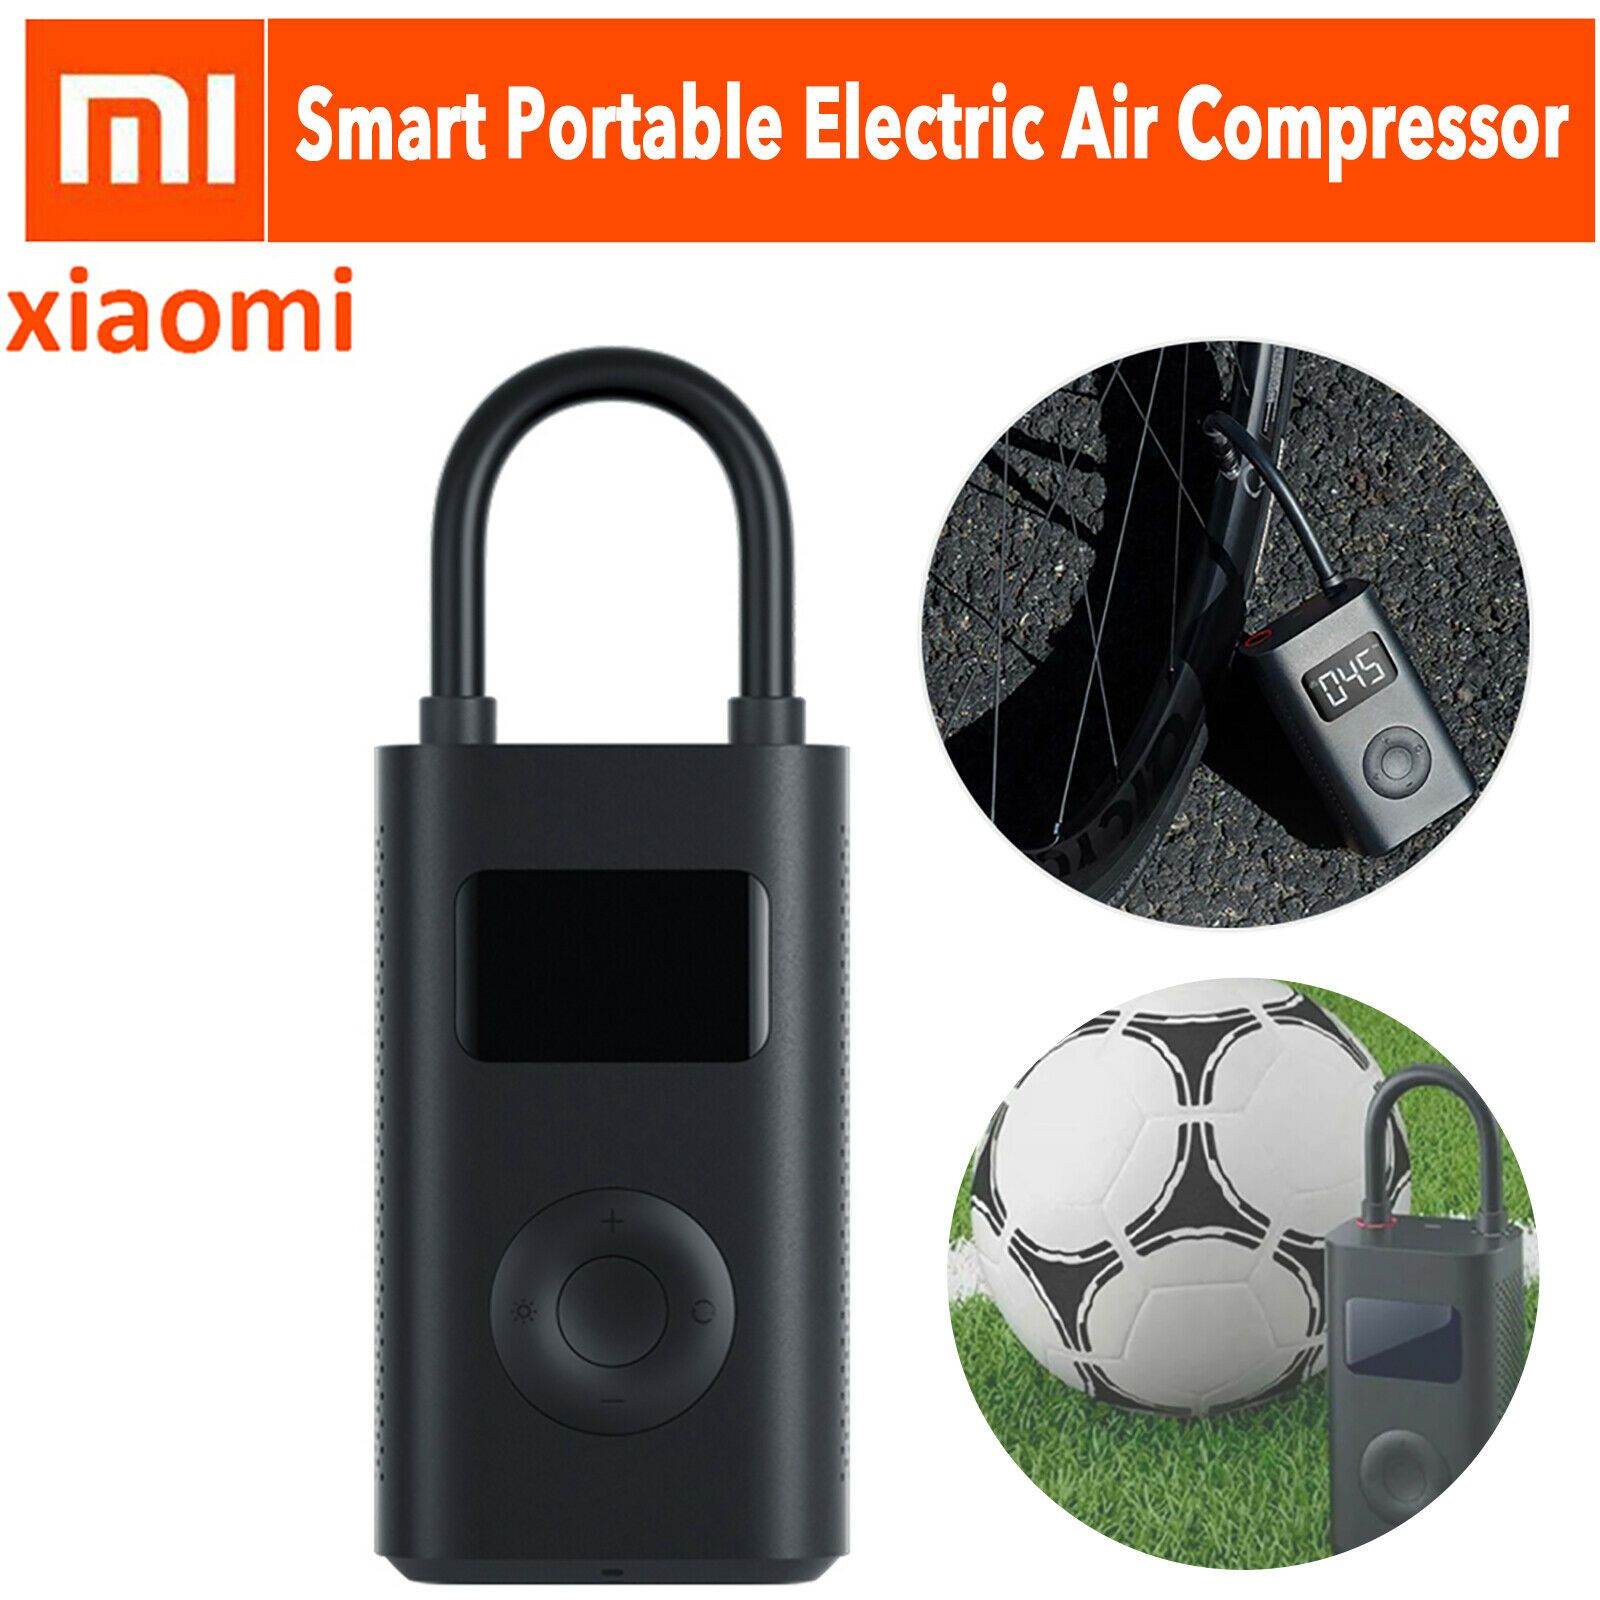 Xiaomi Portable Electric Air Compressor 1S – Xiaomi Australia